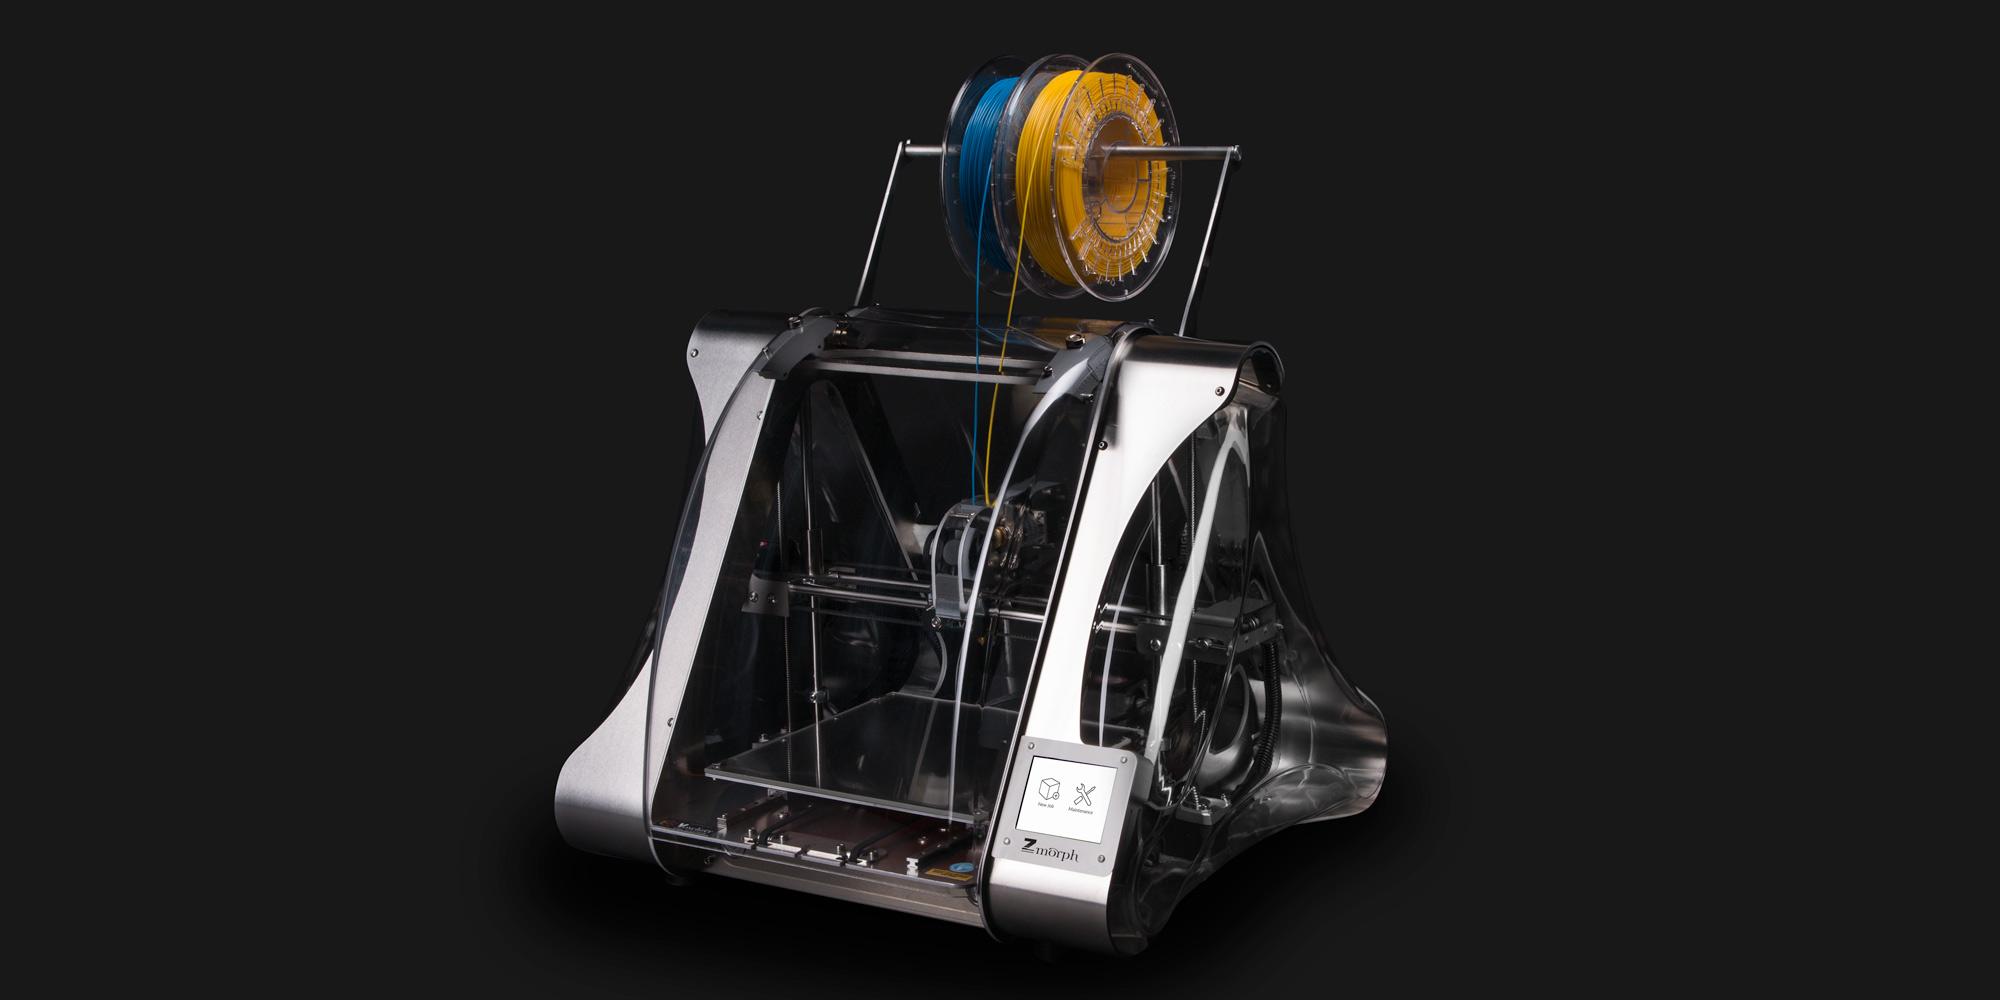 ZMorph VX Multitool 3D Printer